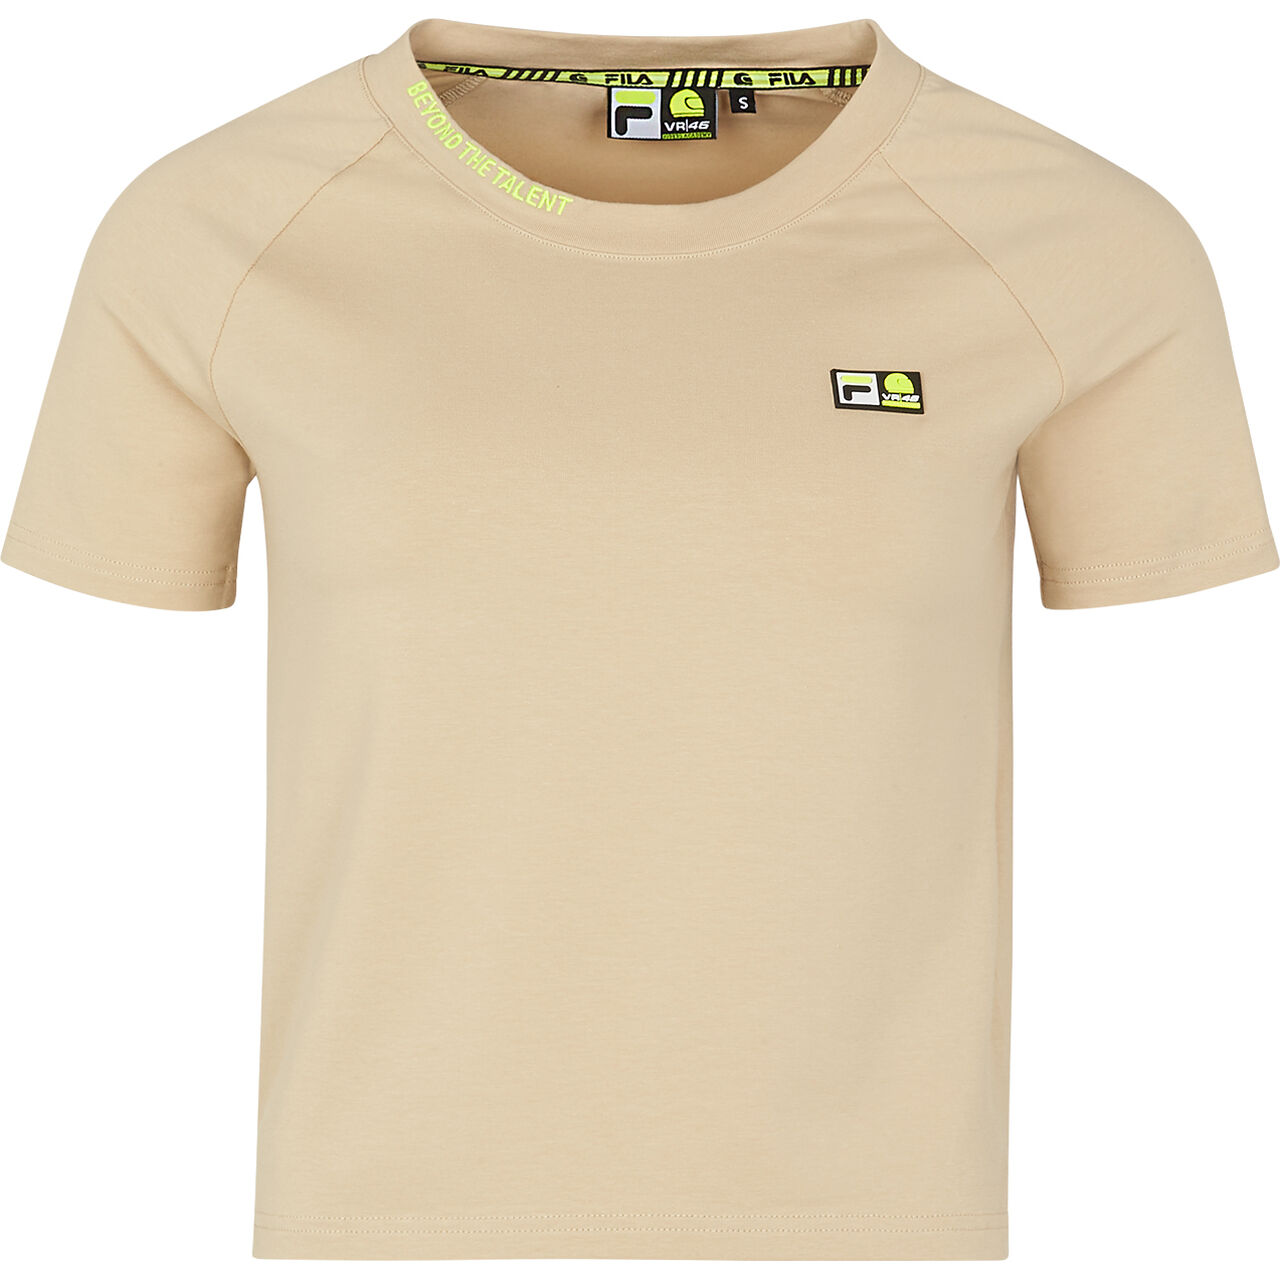 C29 Damen Cropped Shirt beige